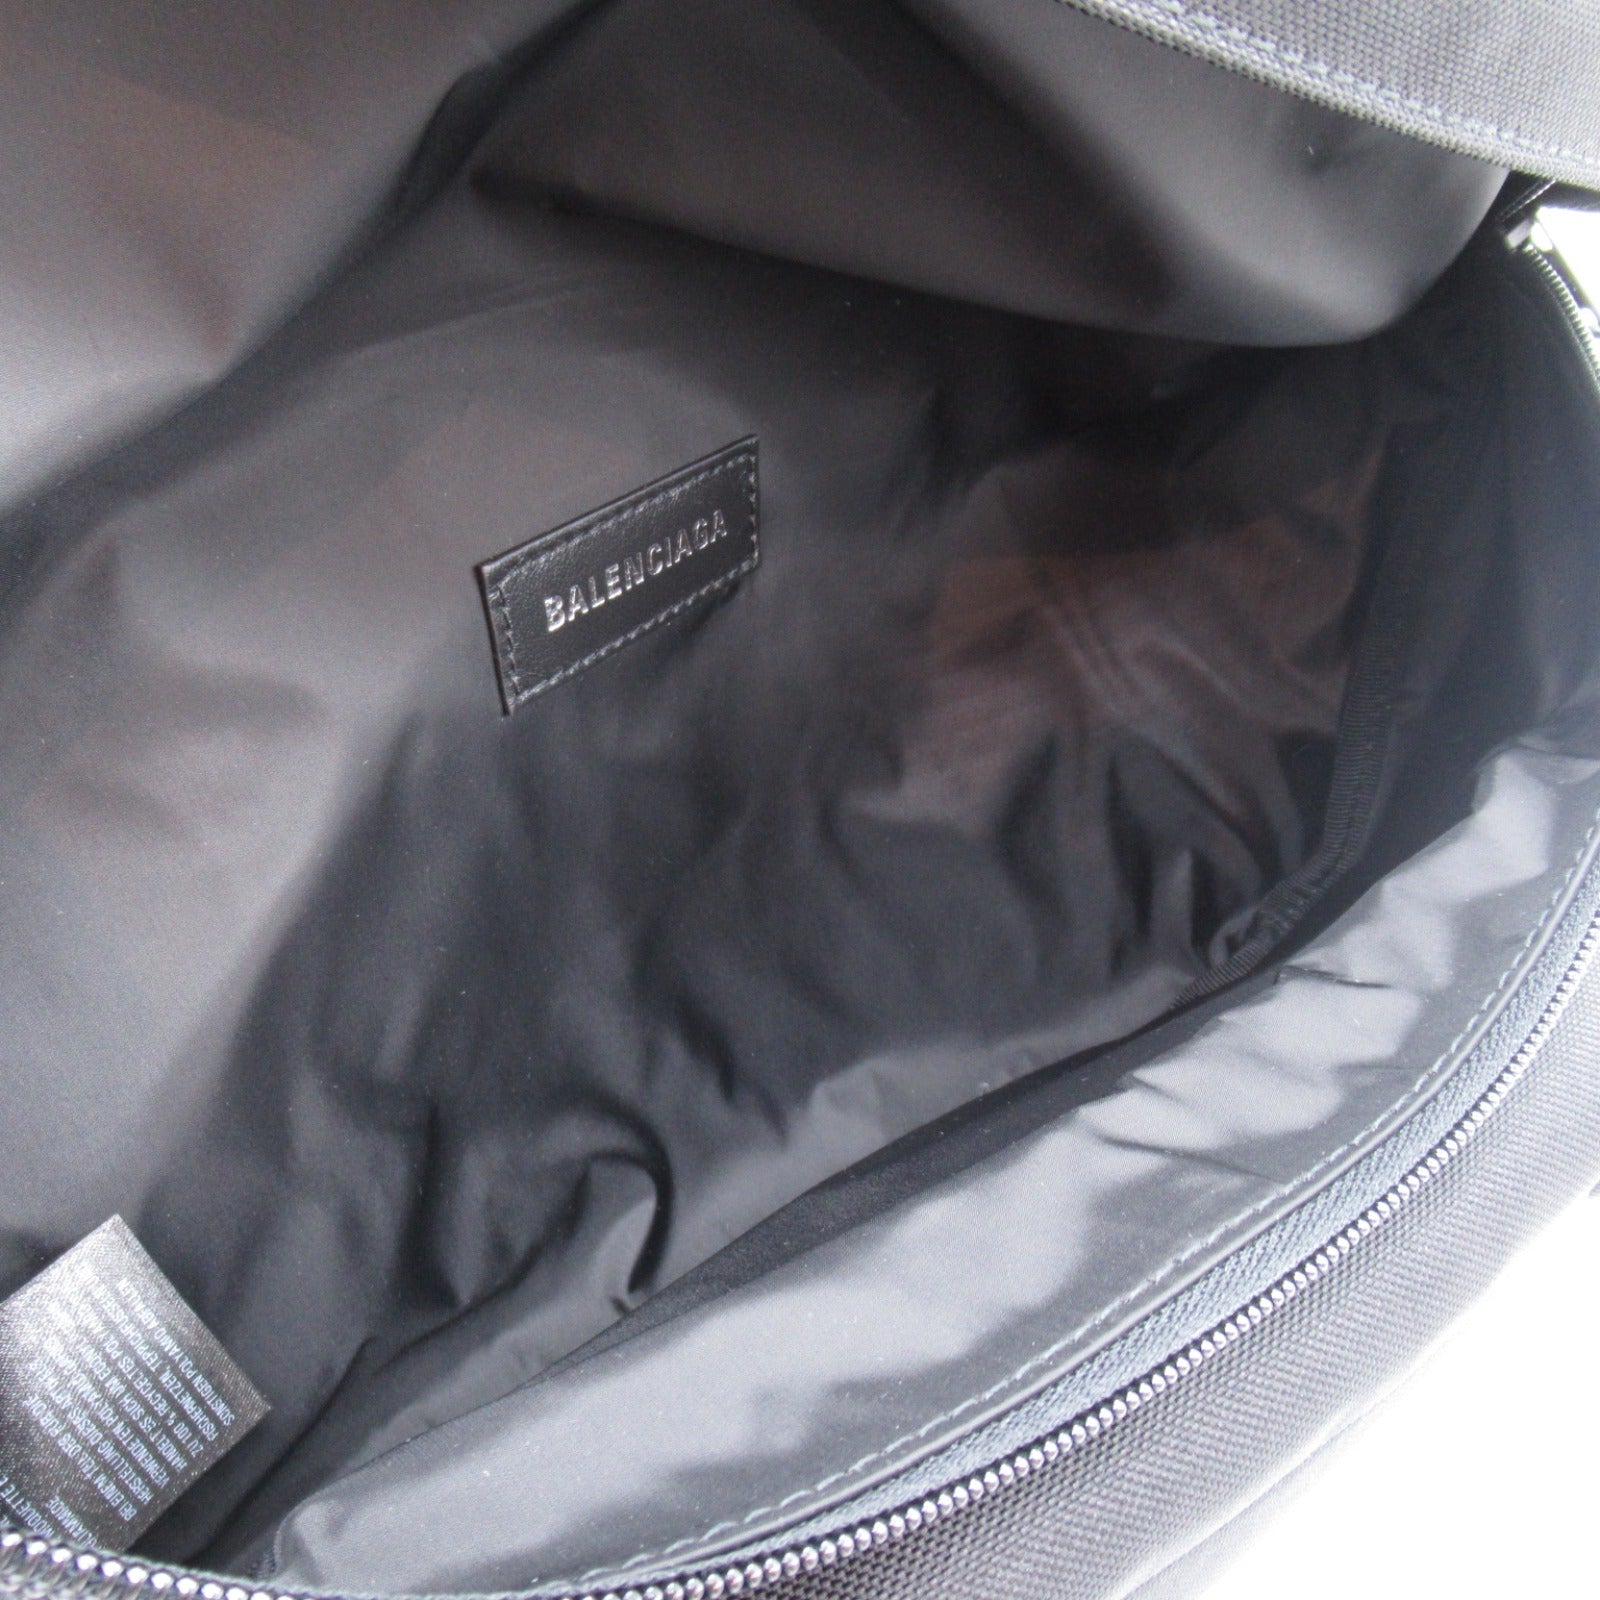 BALENCIAGA Waist Bag Body Bag Body Bag Body Bag Nylon  Black  6440352BKPI1000